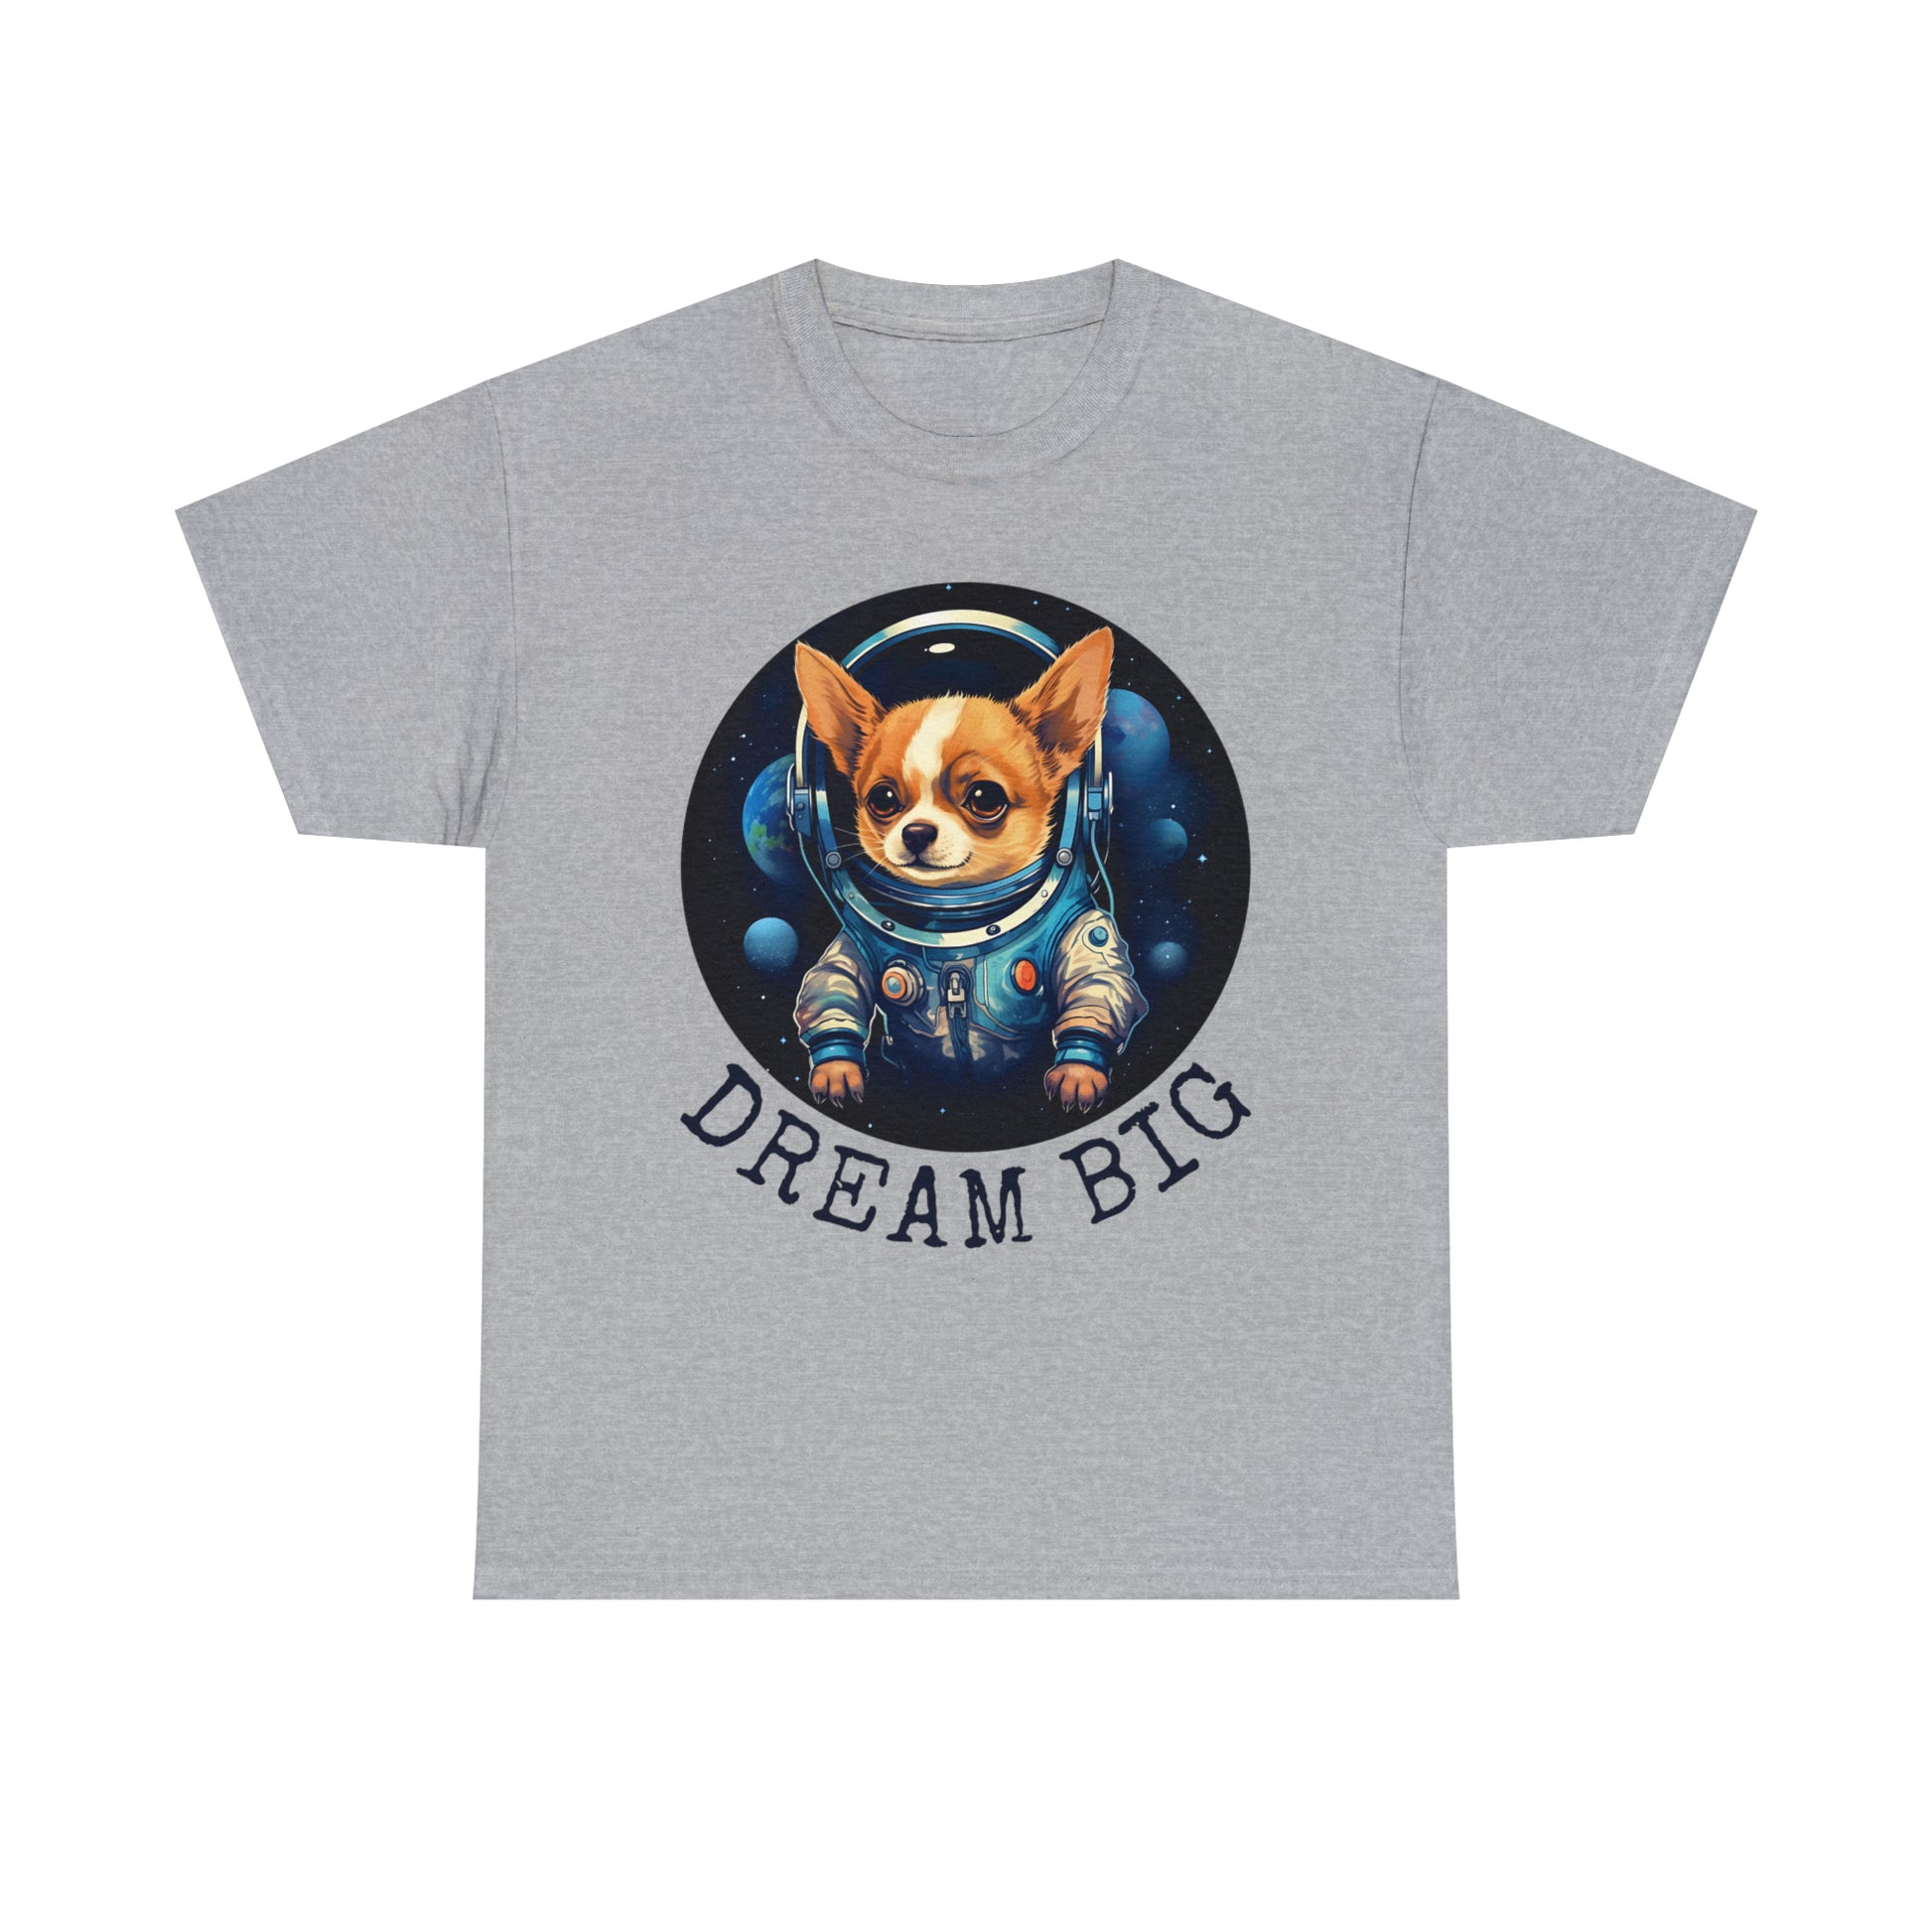 Dog lover tee shirts